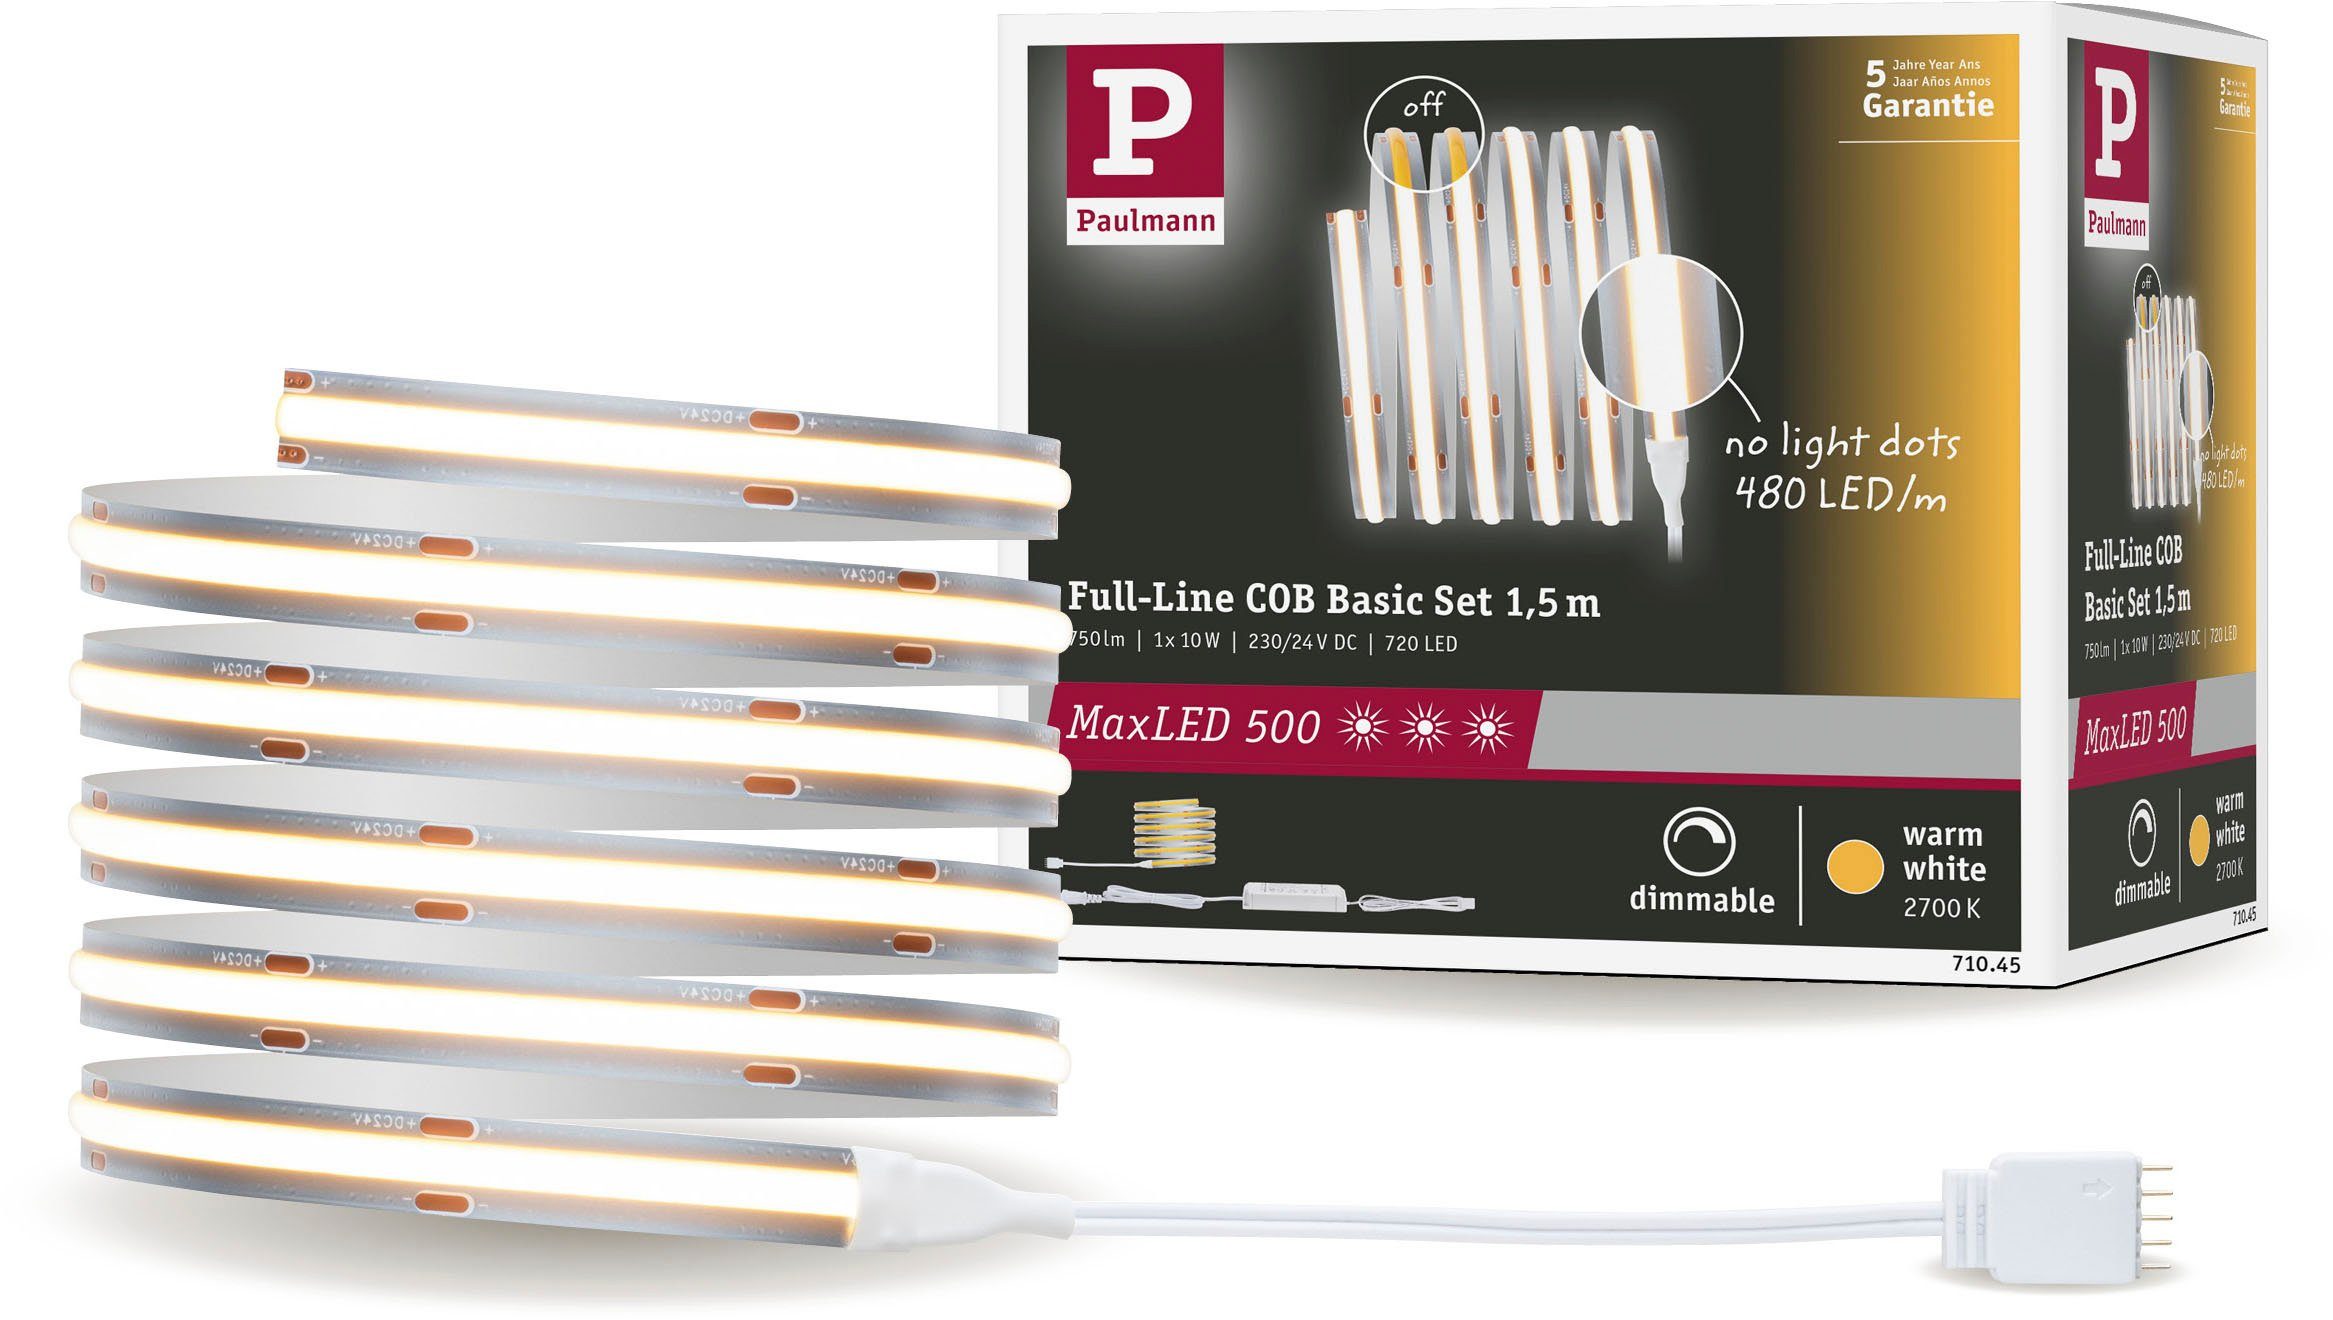 LED-Streifen Full-Line Basisset Paulmann 1-flammig, COB Basisset 750lm 2700K, 480LED warmweiß10W 1,5m, MaxLED 500